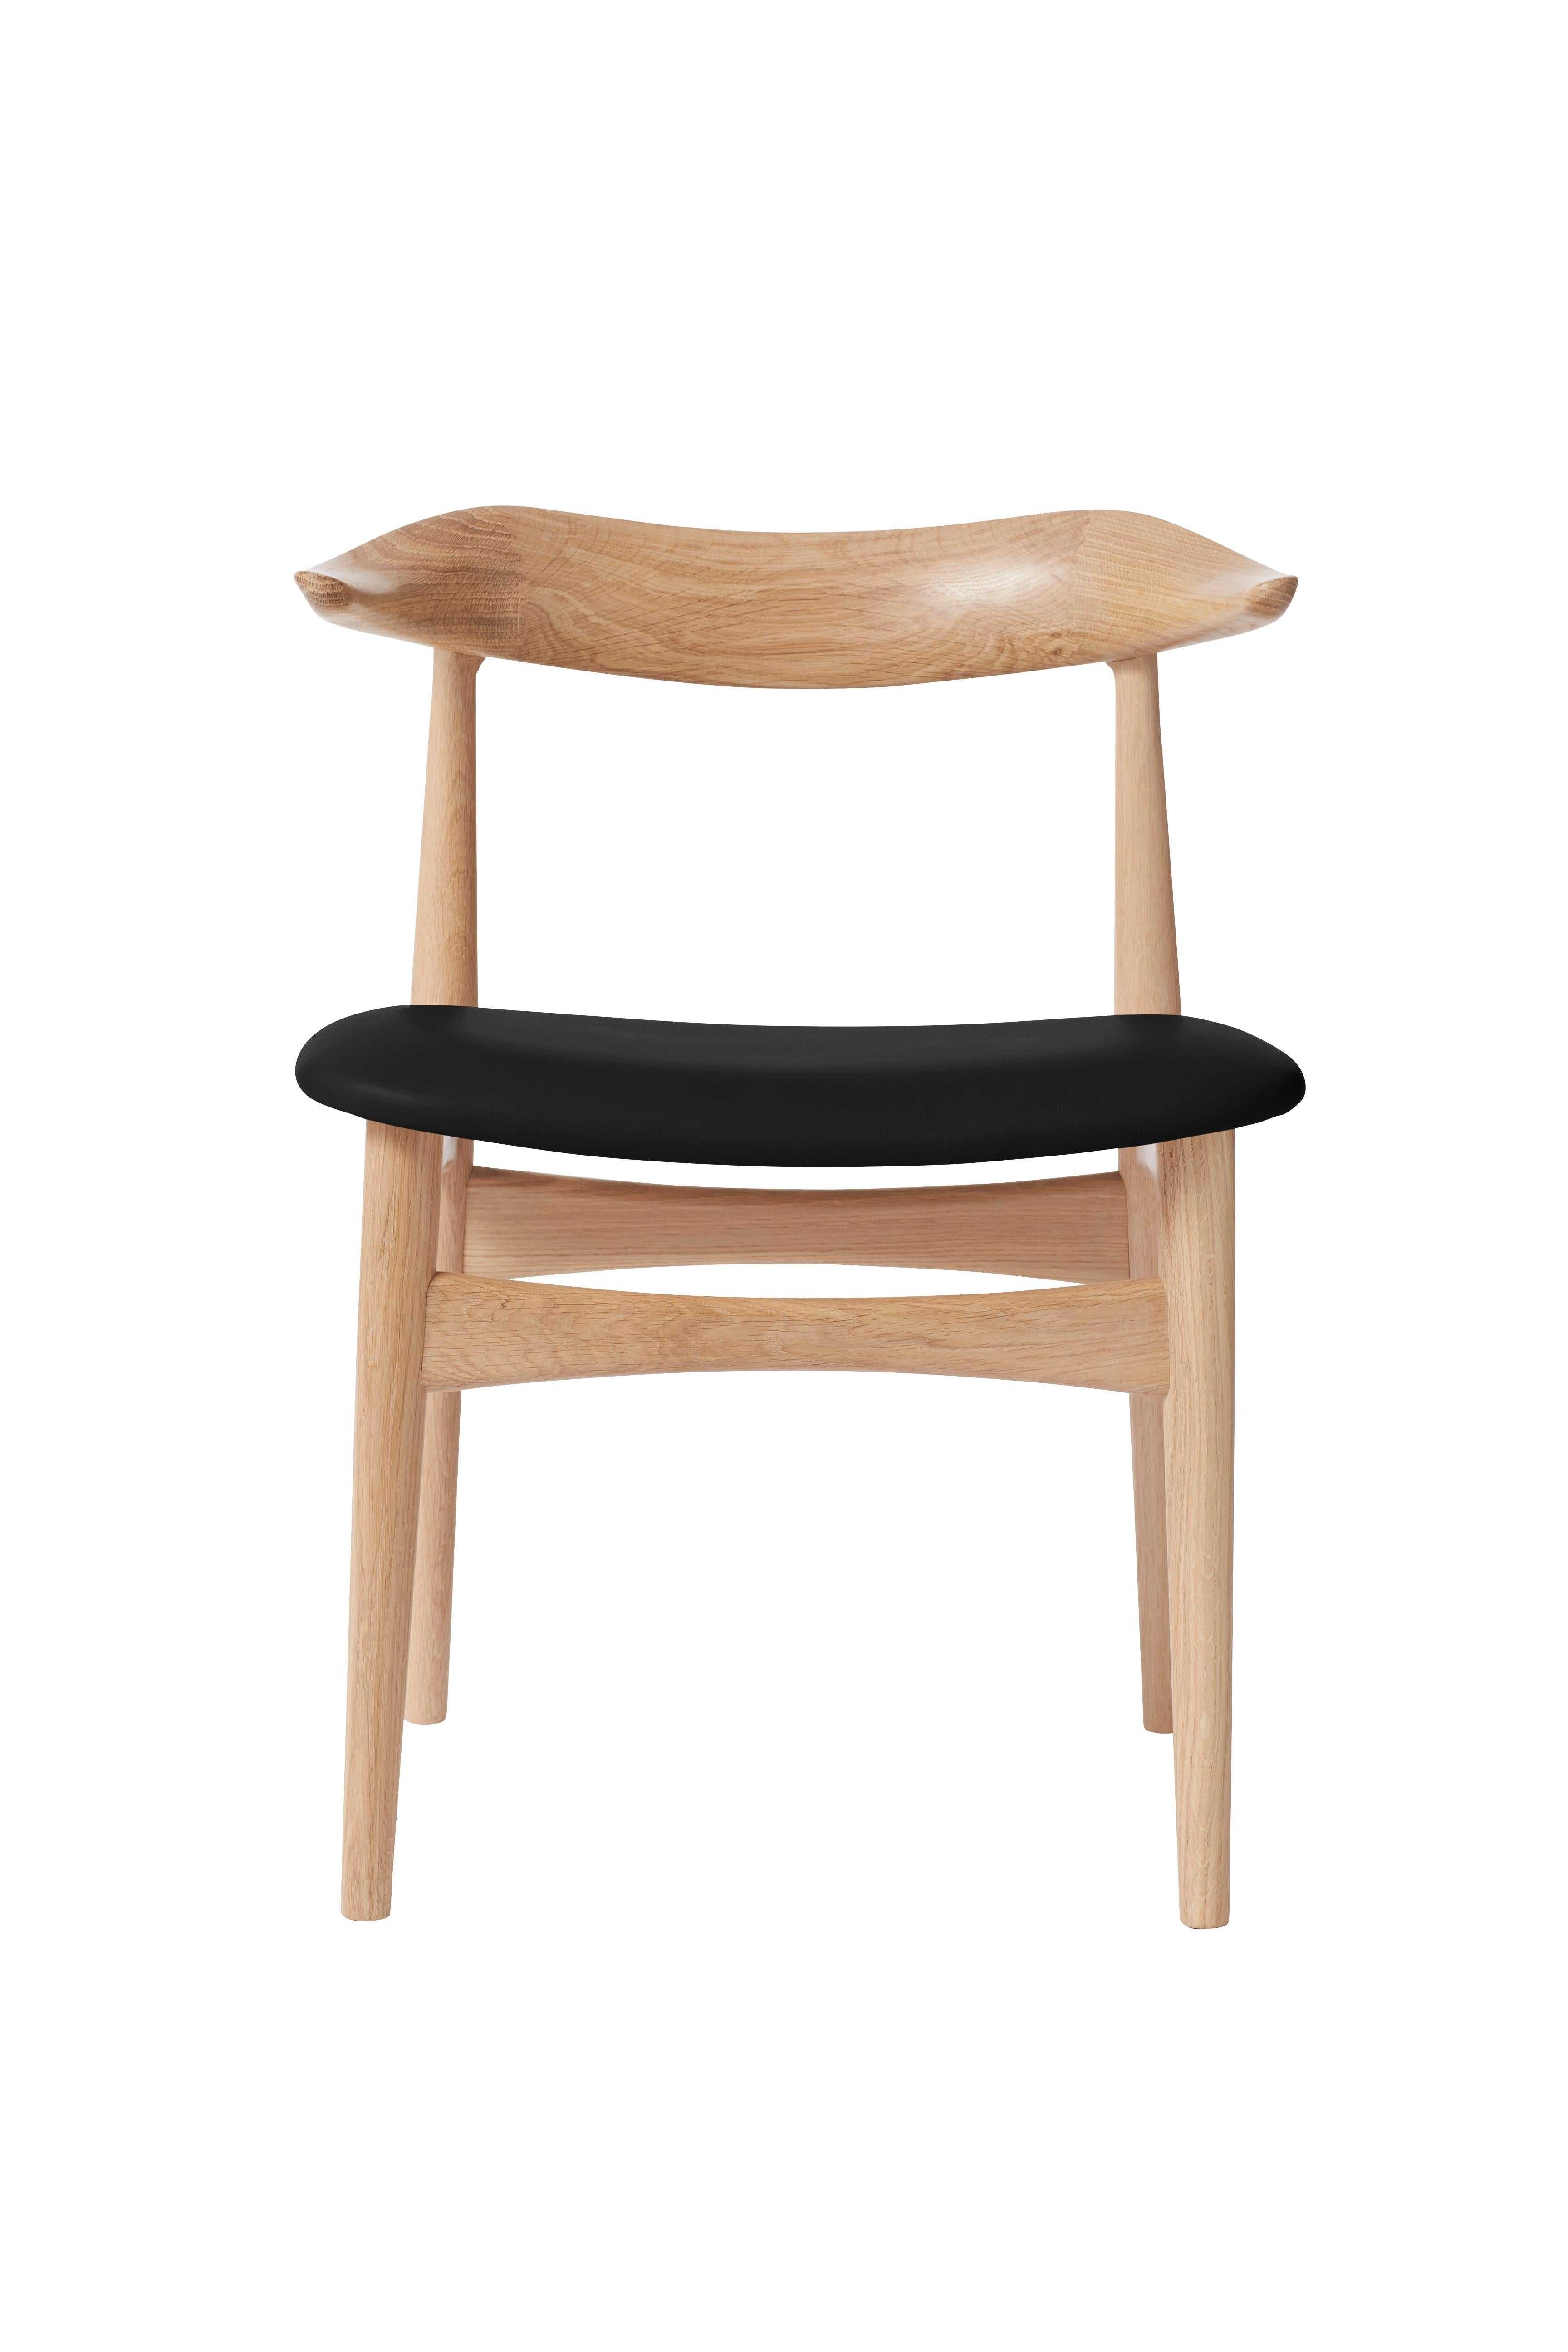 For Sale: Black (Prescott 207) Cow Horn Oak Chair, by Knud Færch from Warm Nordic